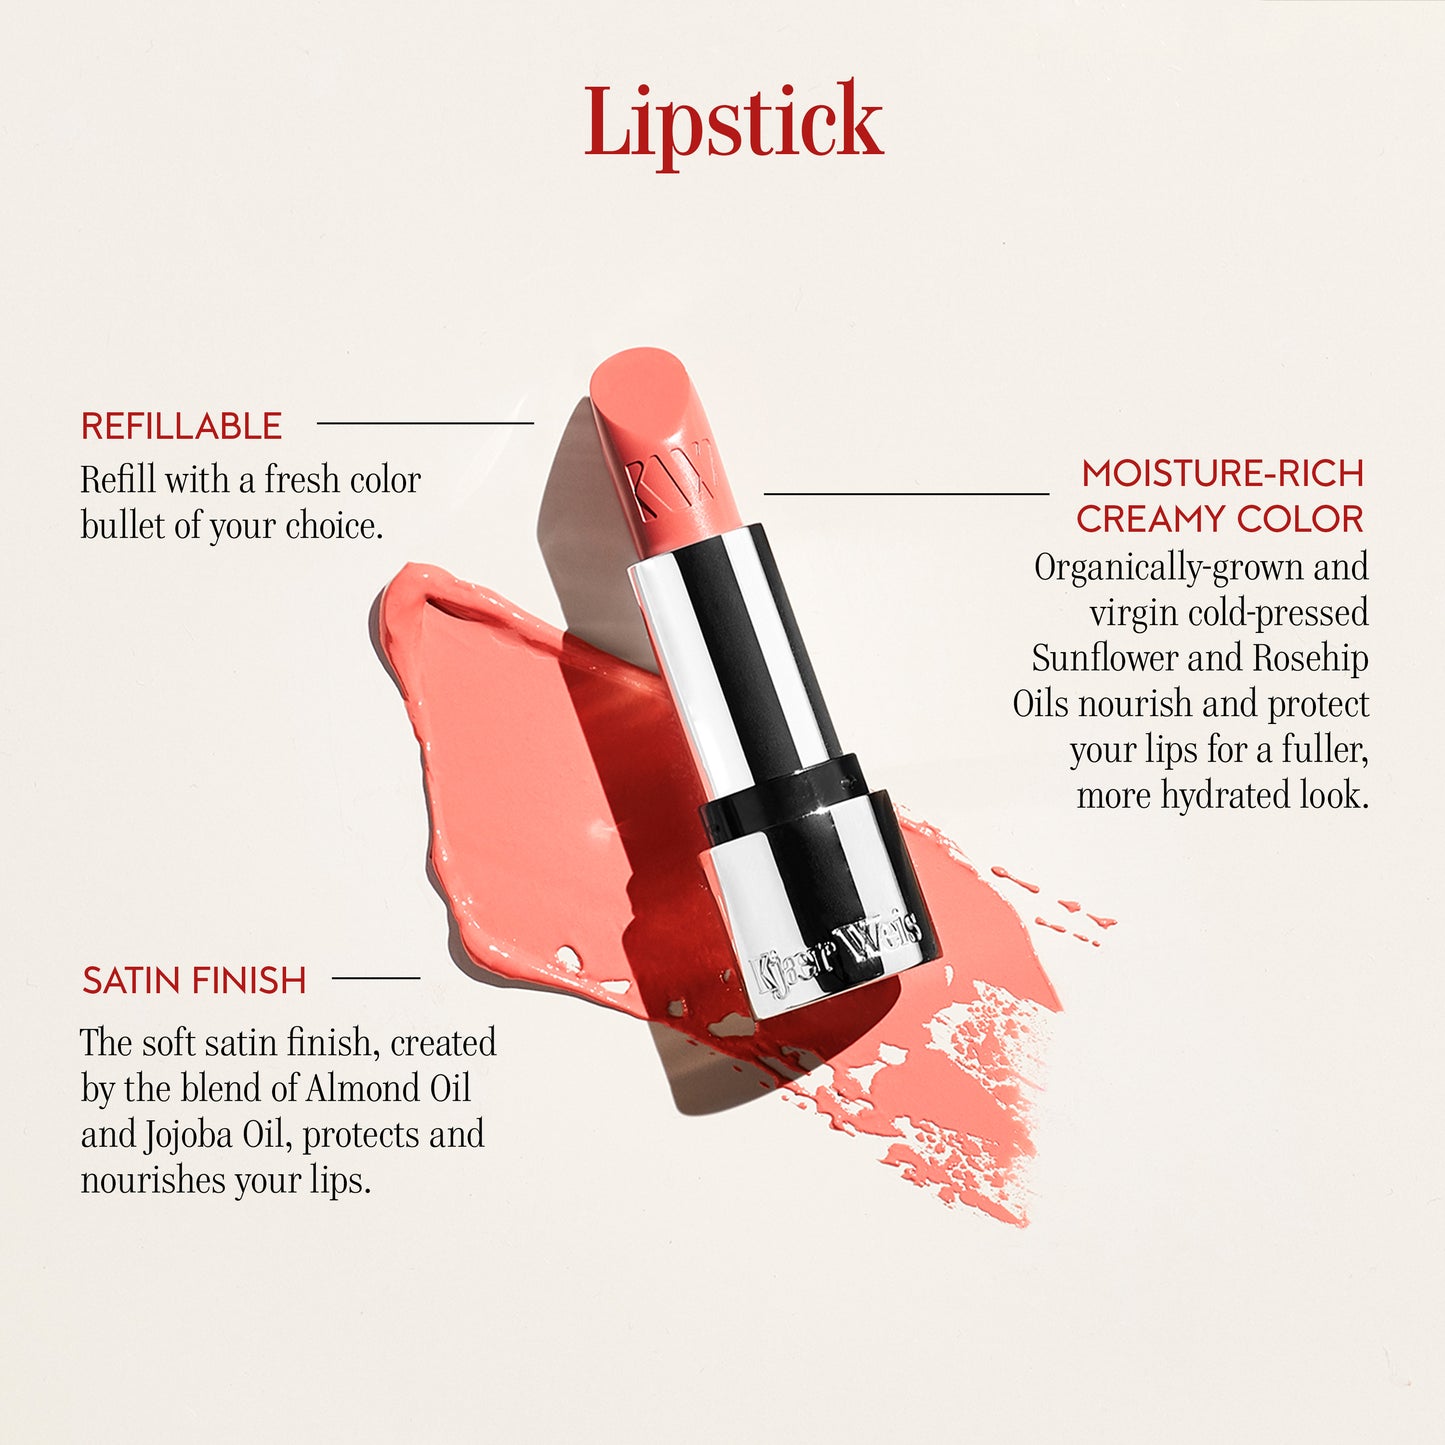 Lipstick--Affection